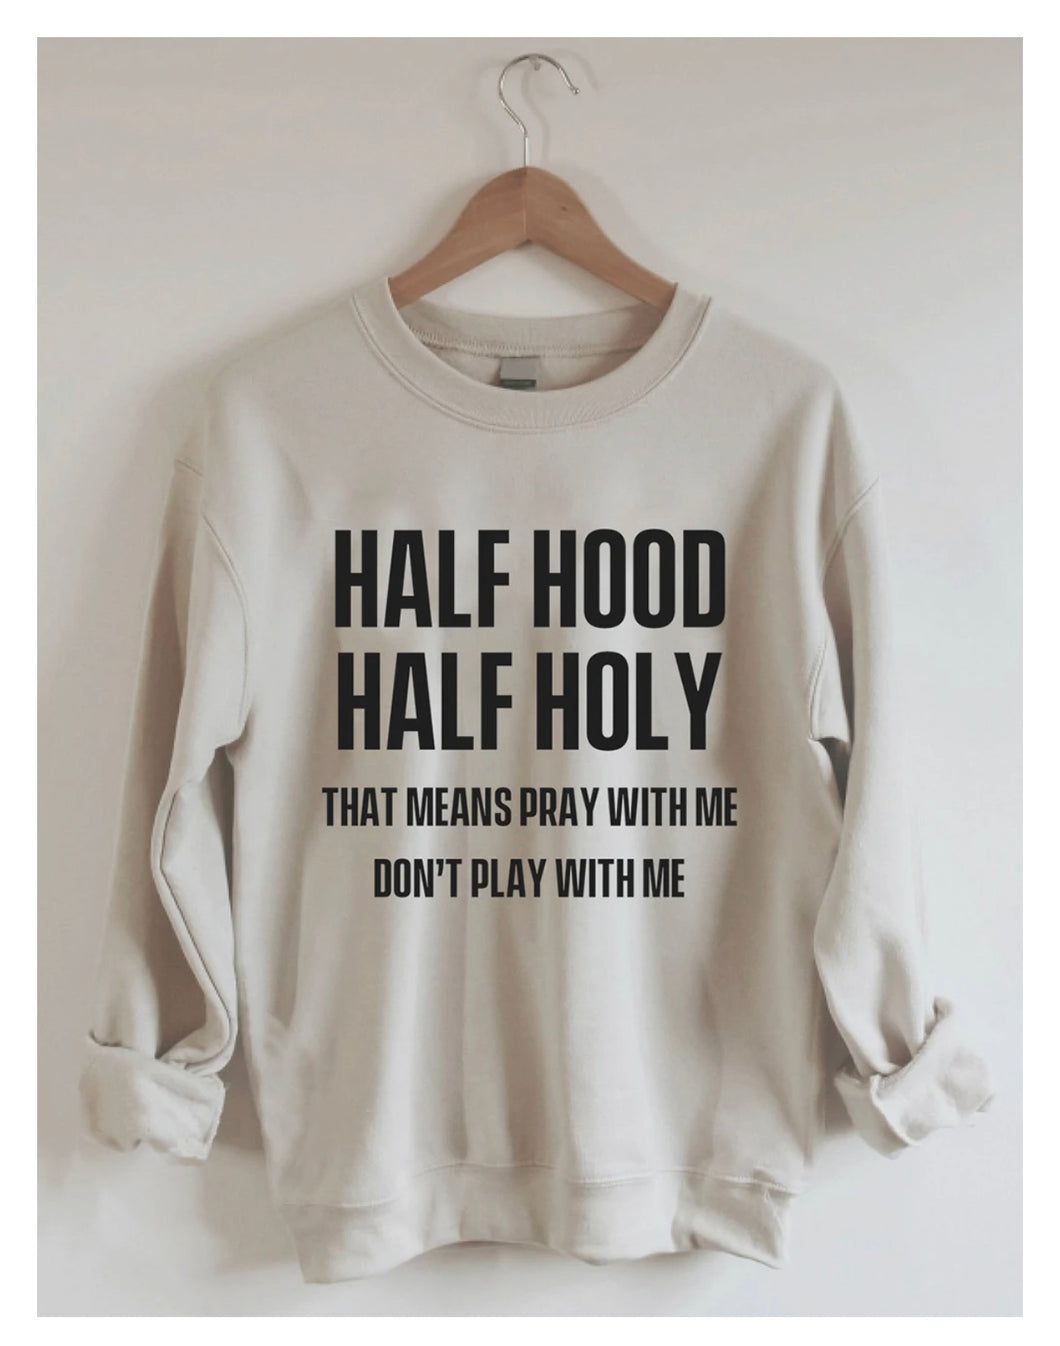 Half hood Half holy